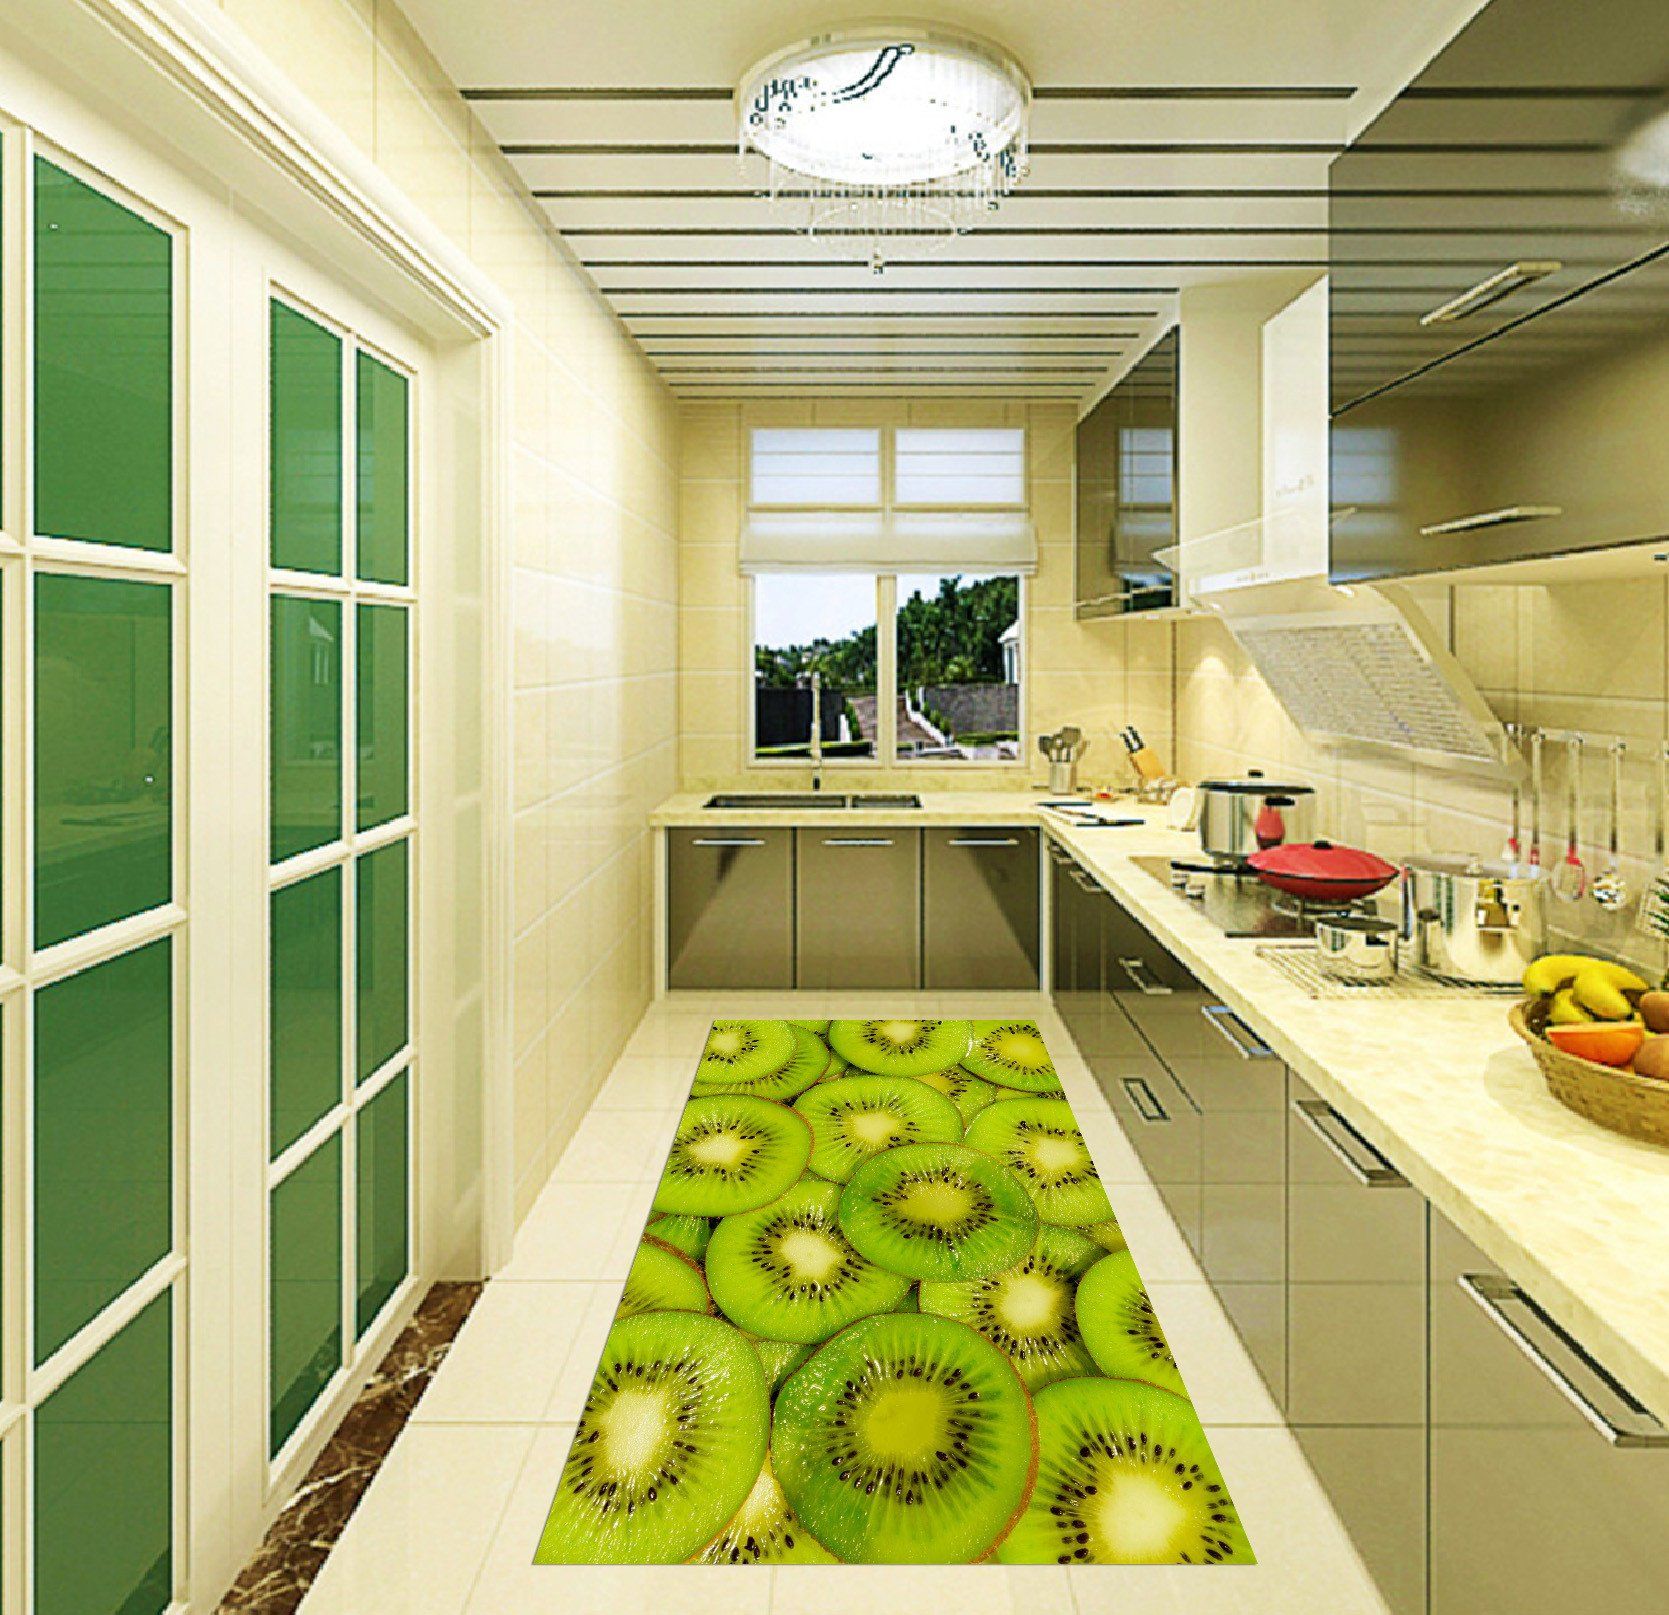 3D Kiwi Slices 019 Kitchen Mat Floor Mural Wallpaper AJ Wallpaper 